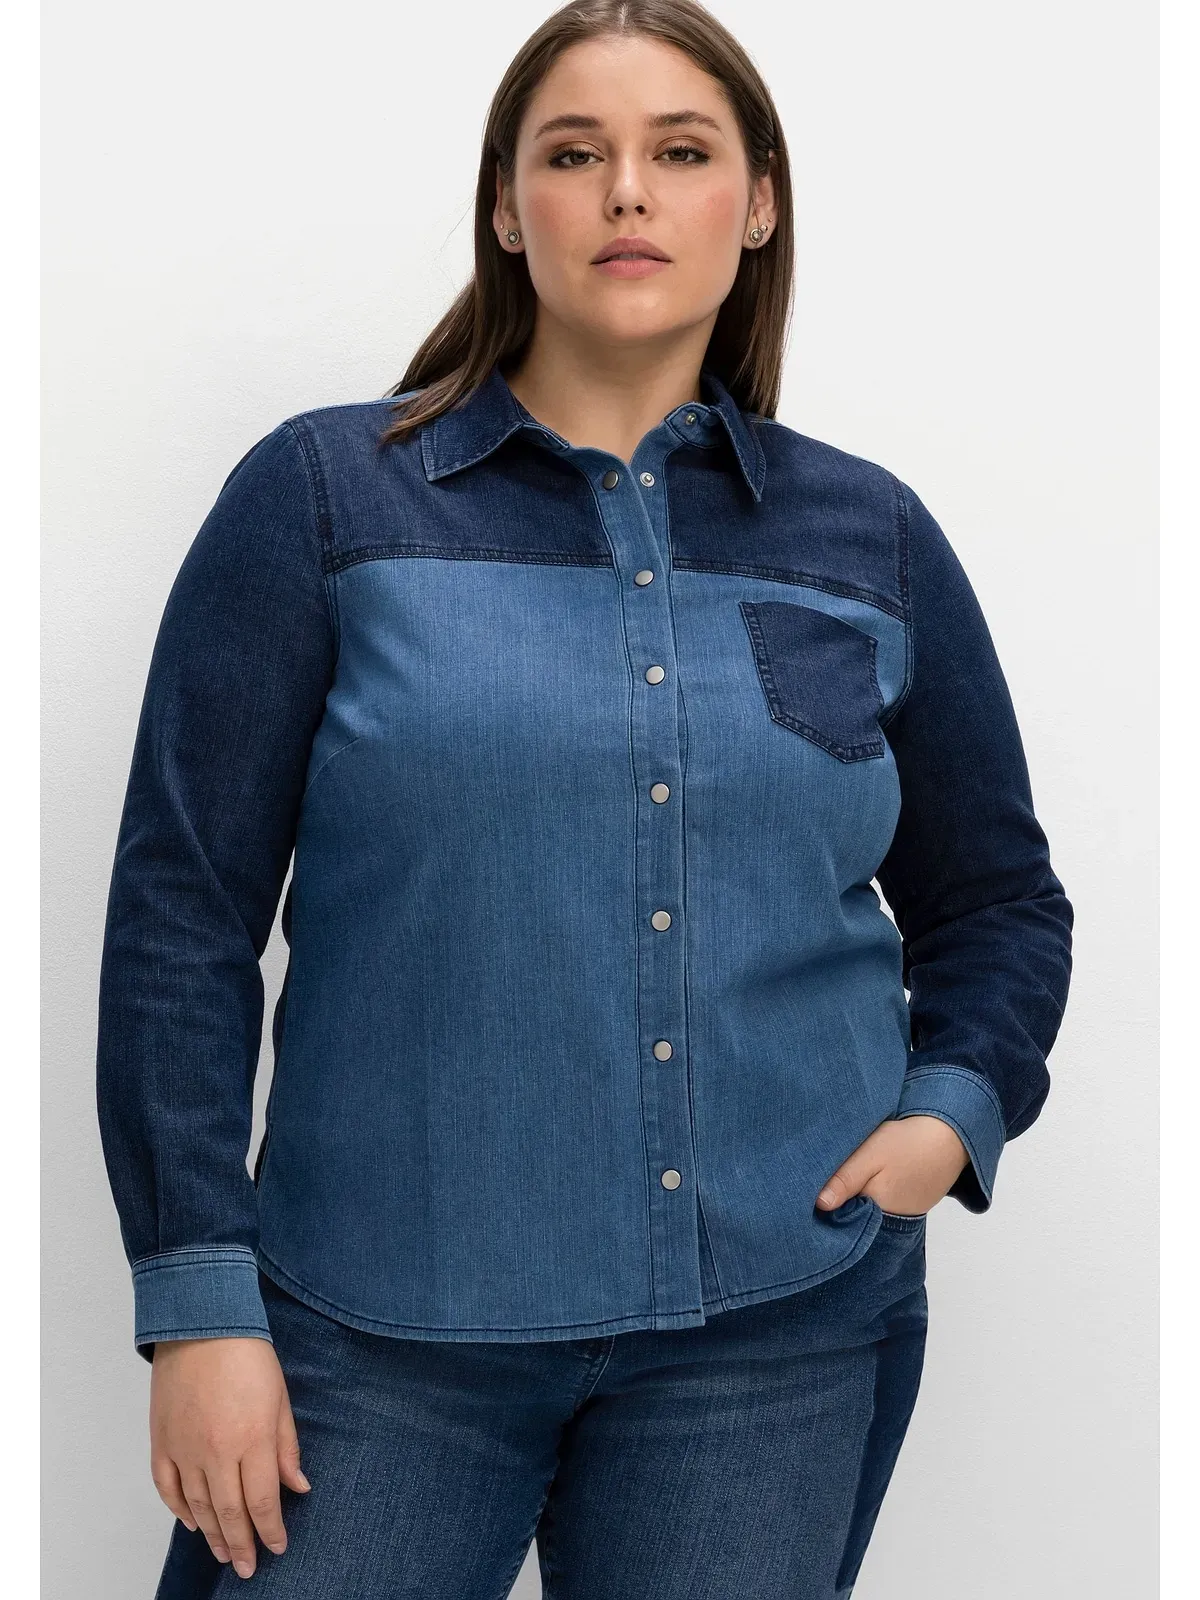 Jeansbluse SHEEGO "Große Größen" Gr. 58, blau (blue denim) Damen Blusen langarm